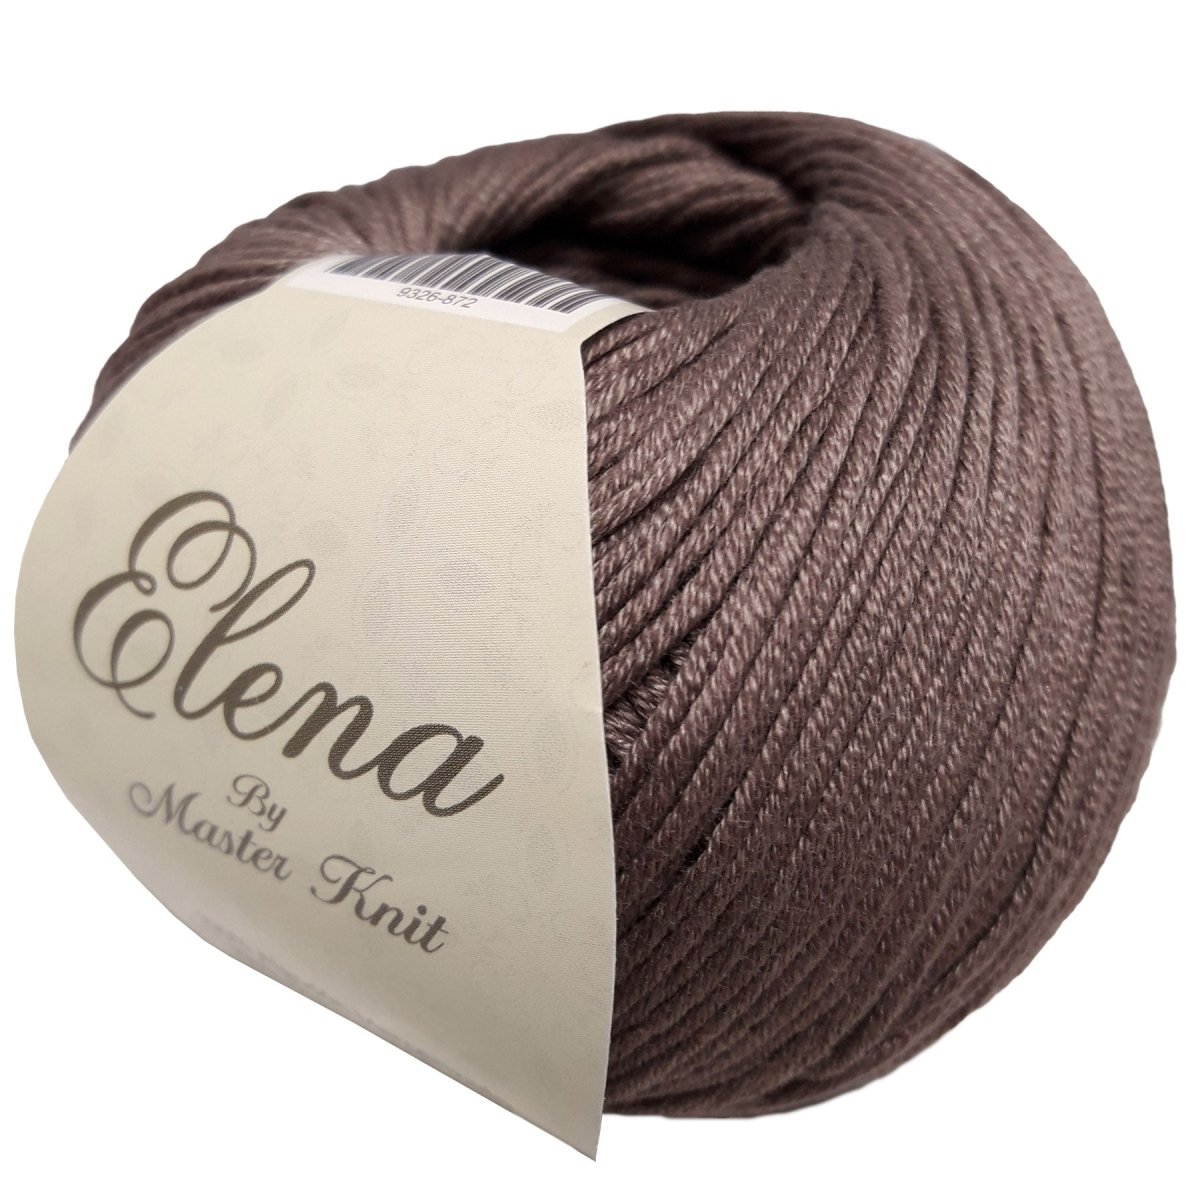 ELENA - Crochetstores9326-872745051438968